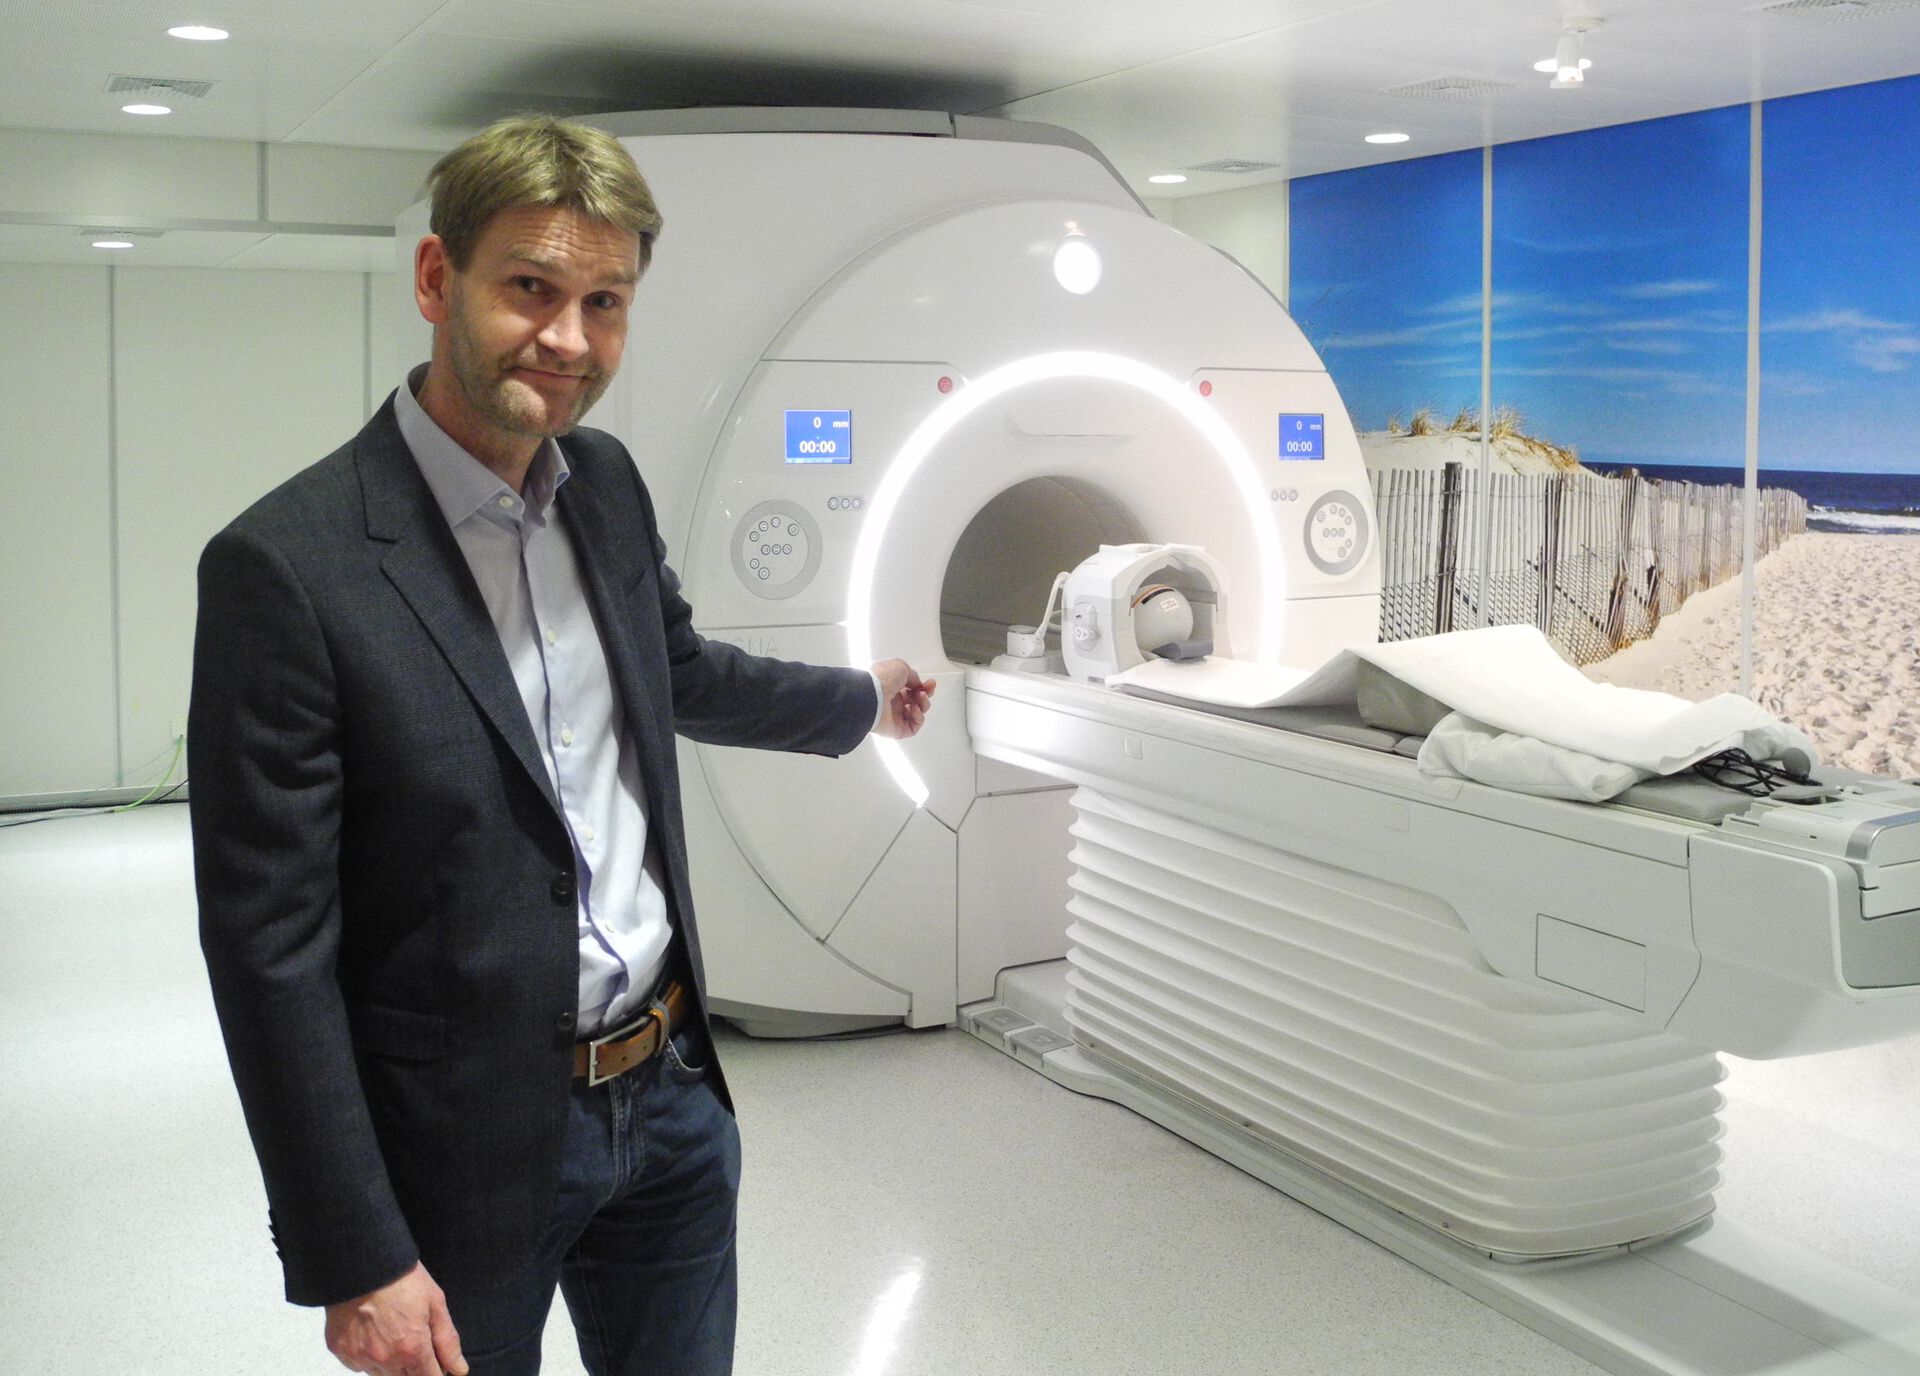 Man points at MRI machine.